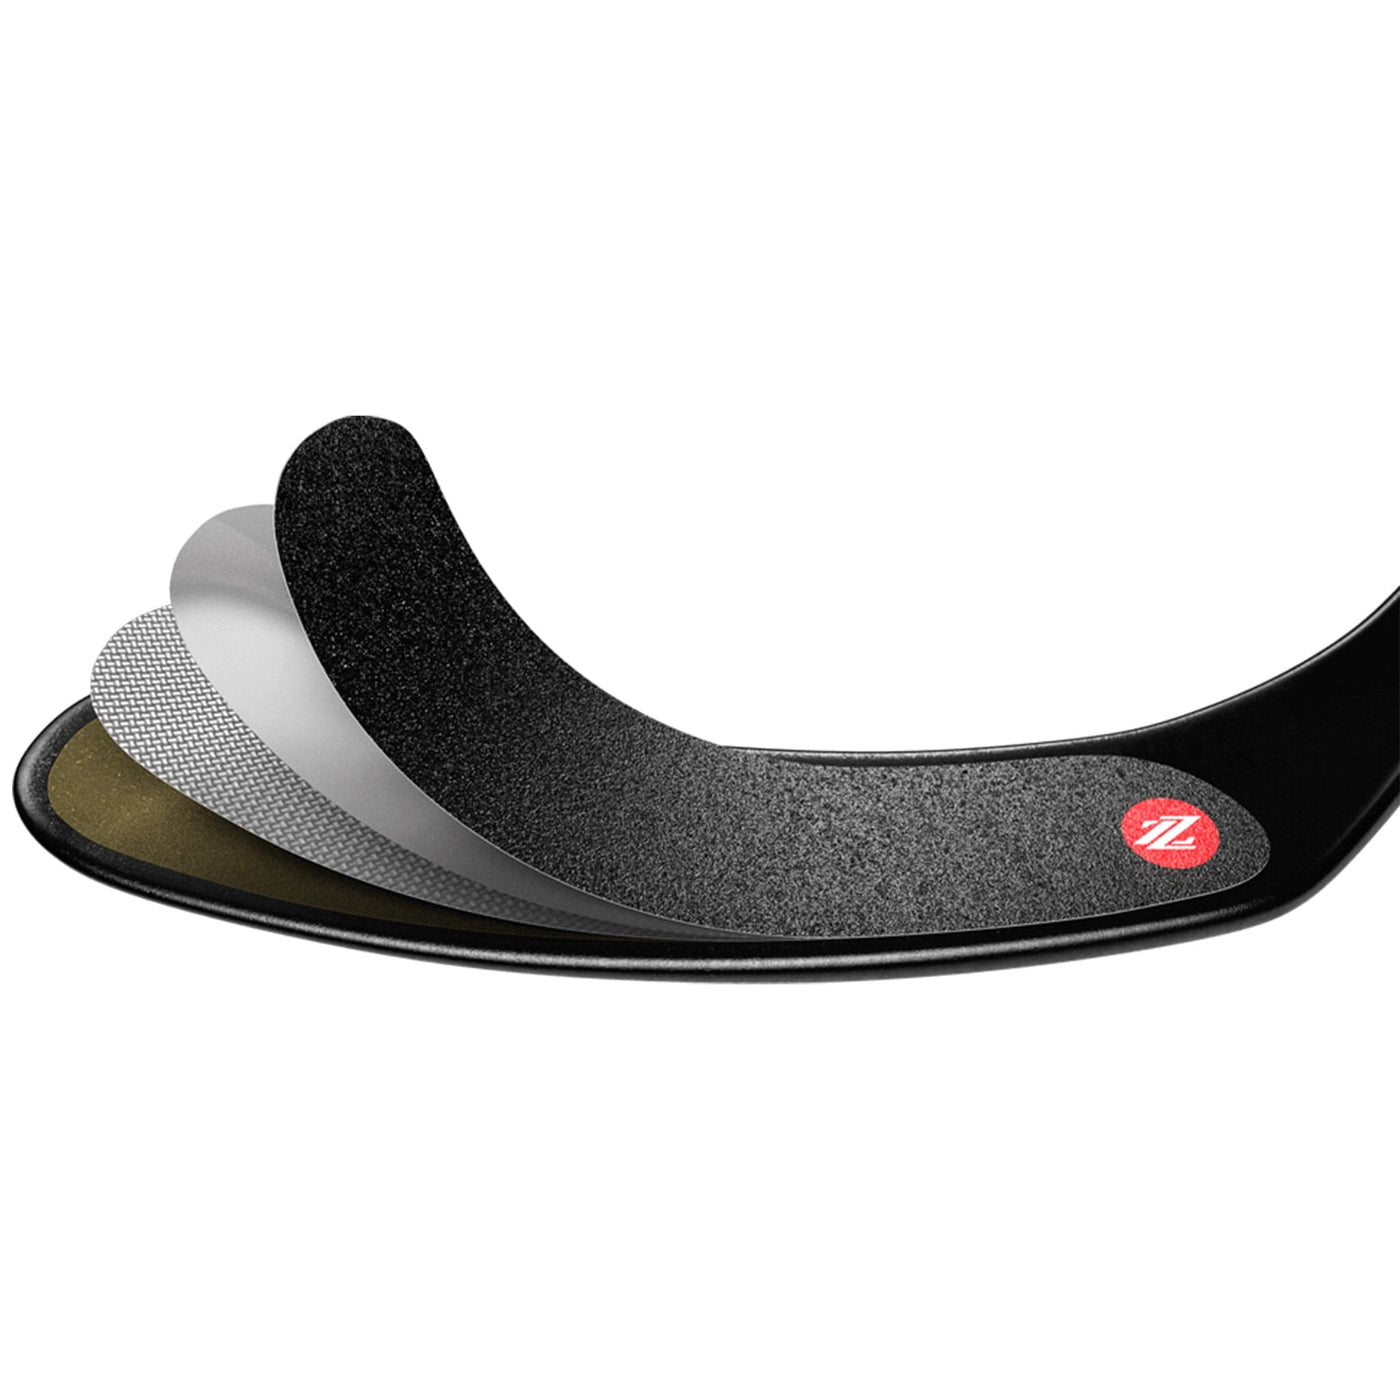 RezzTek Blade Tape Standard - 2 Pack - The Hockey Shop Source For Sports